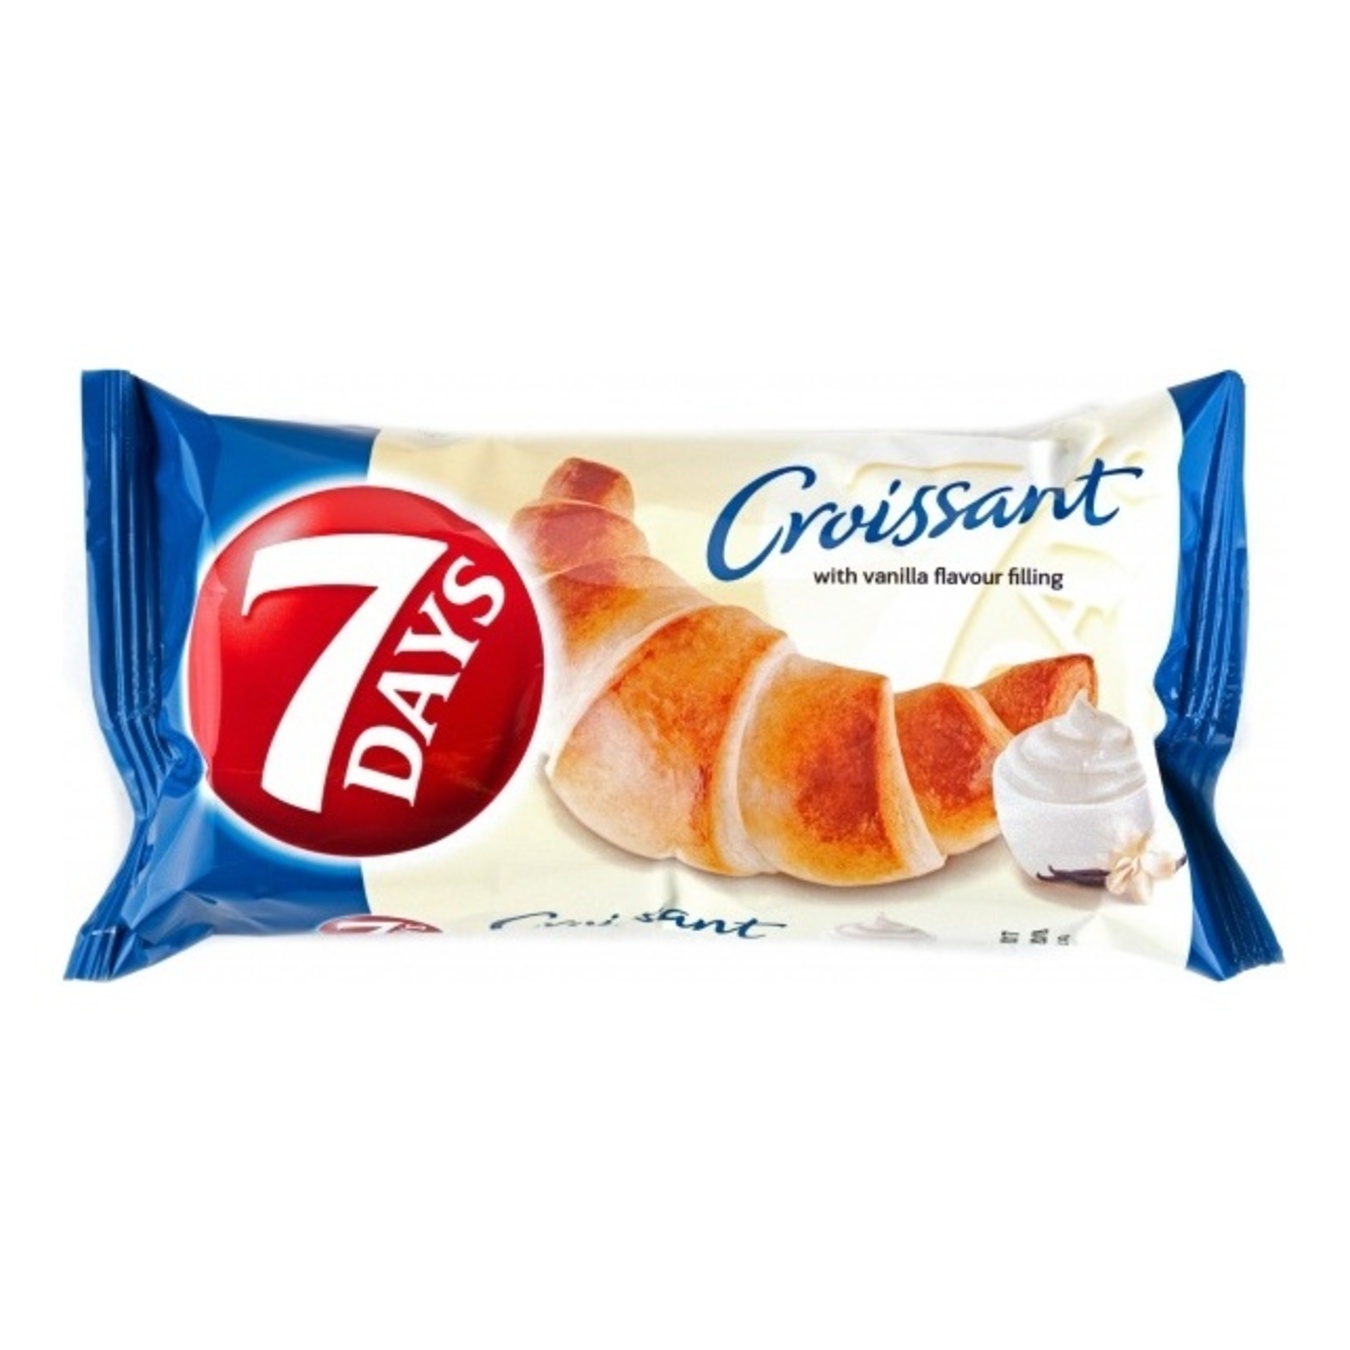 7DAYS Vanilla Cream Croissant 60g